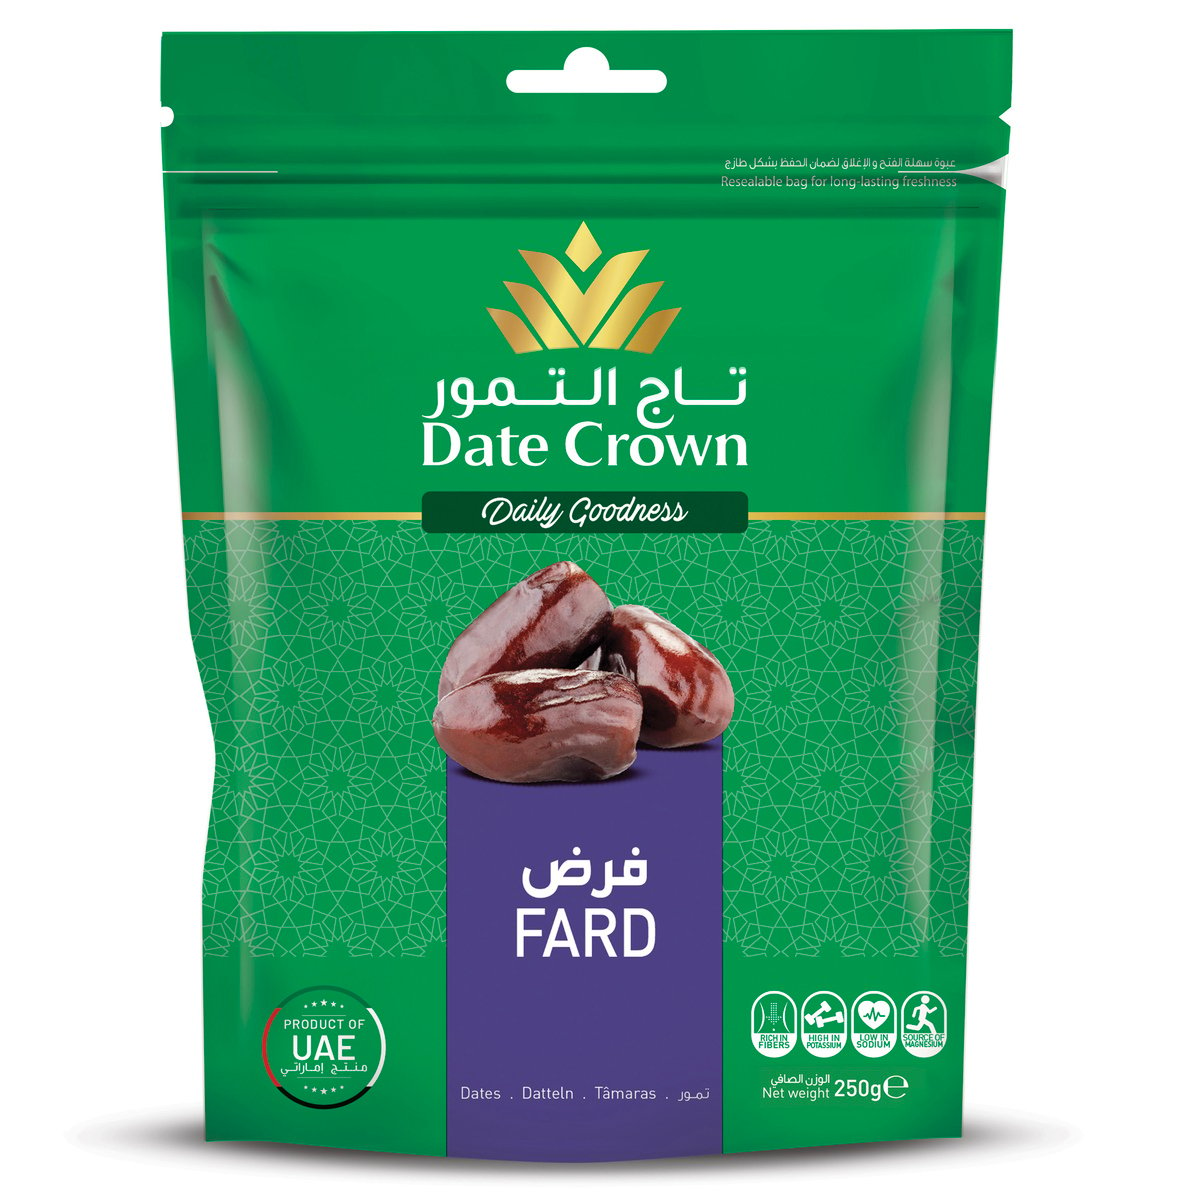 Date Crown Fard Dates Pouch 250 g